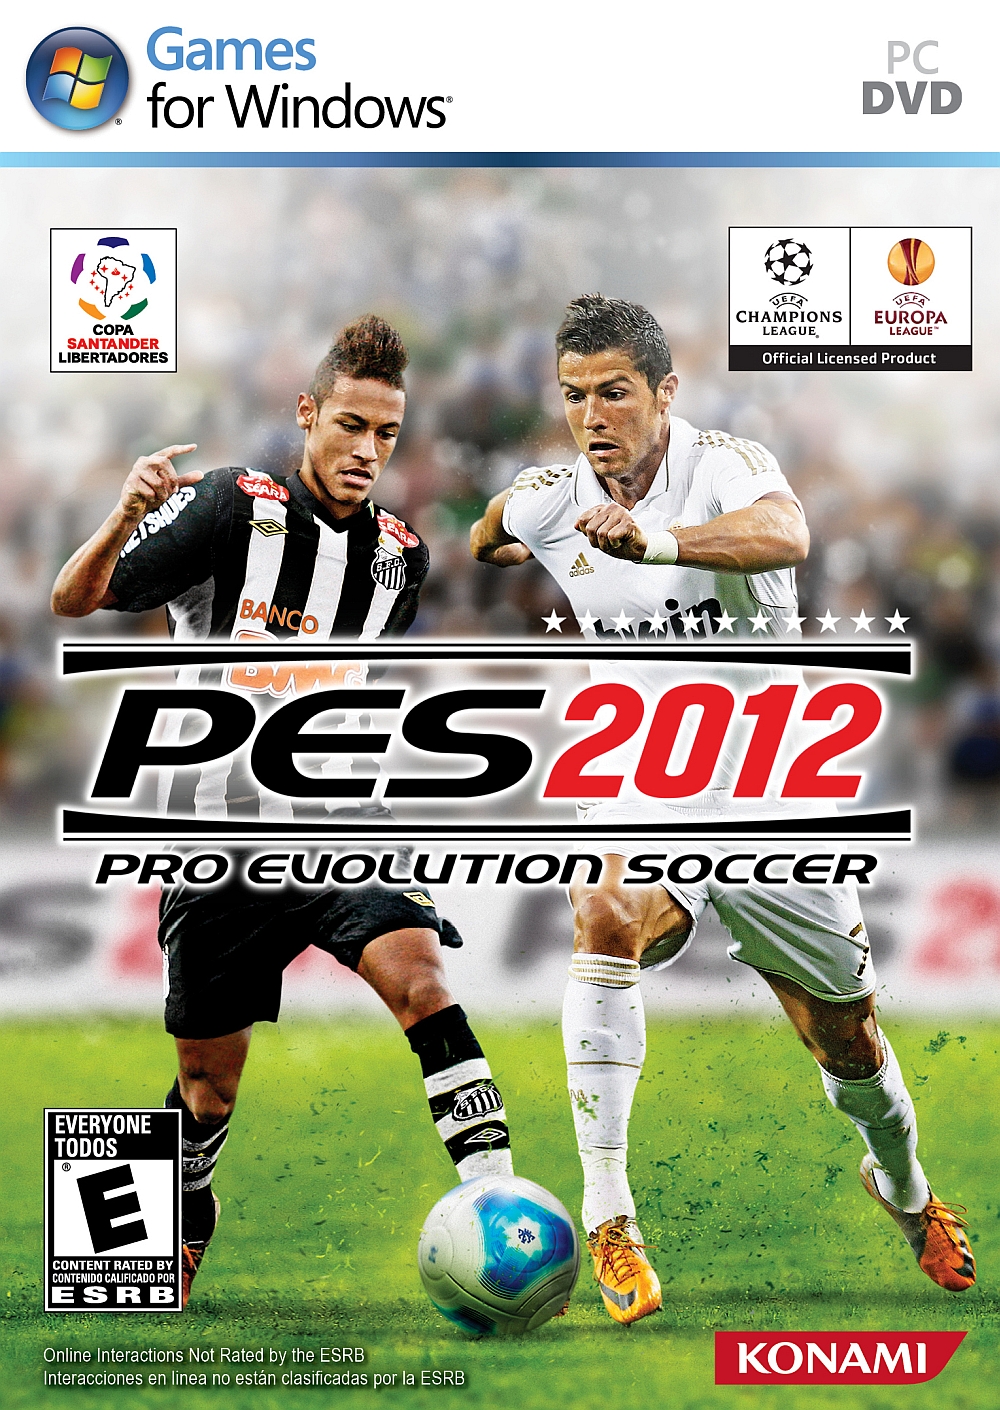 Download PES 2012 PC Full Version Gratis  Tutorial Download